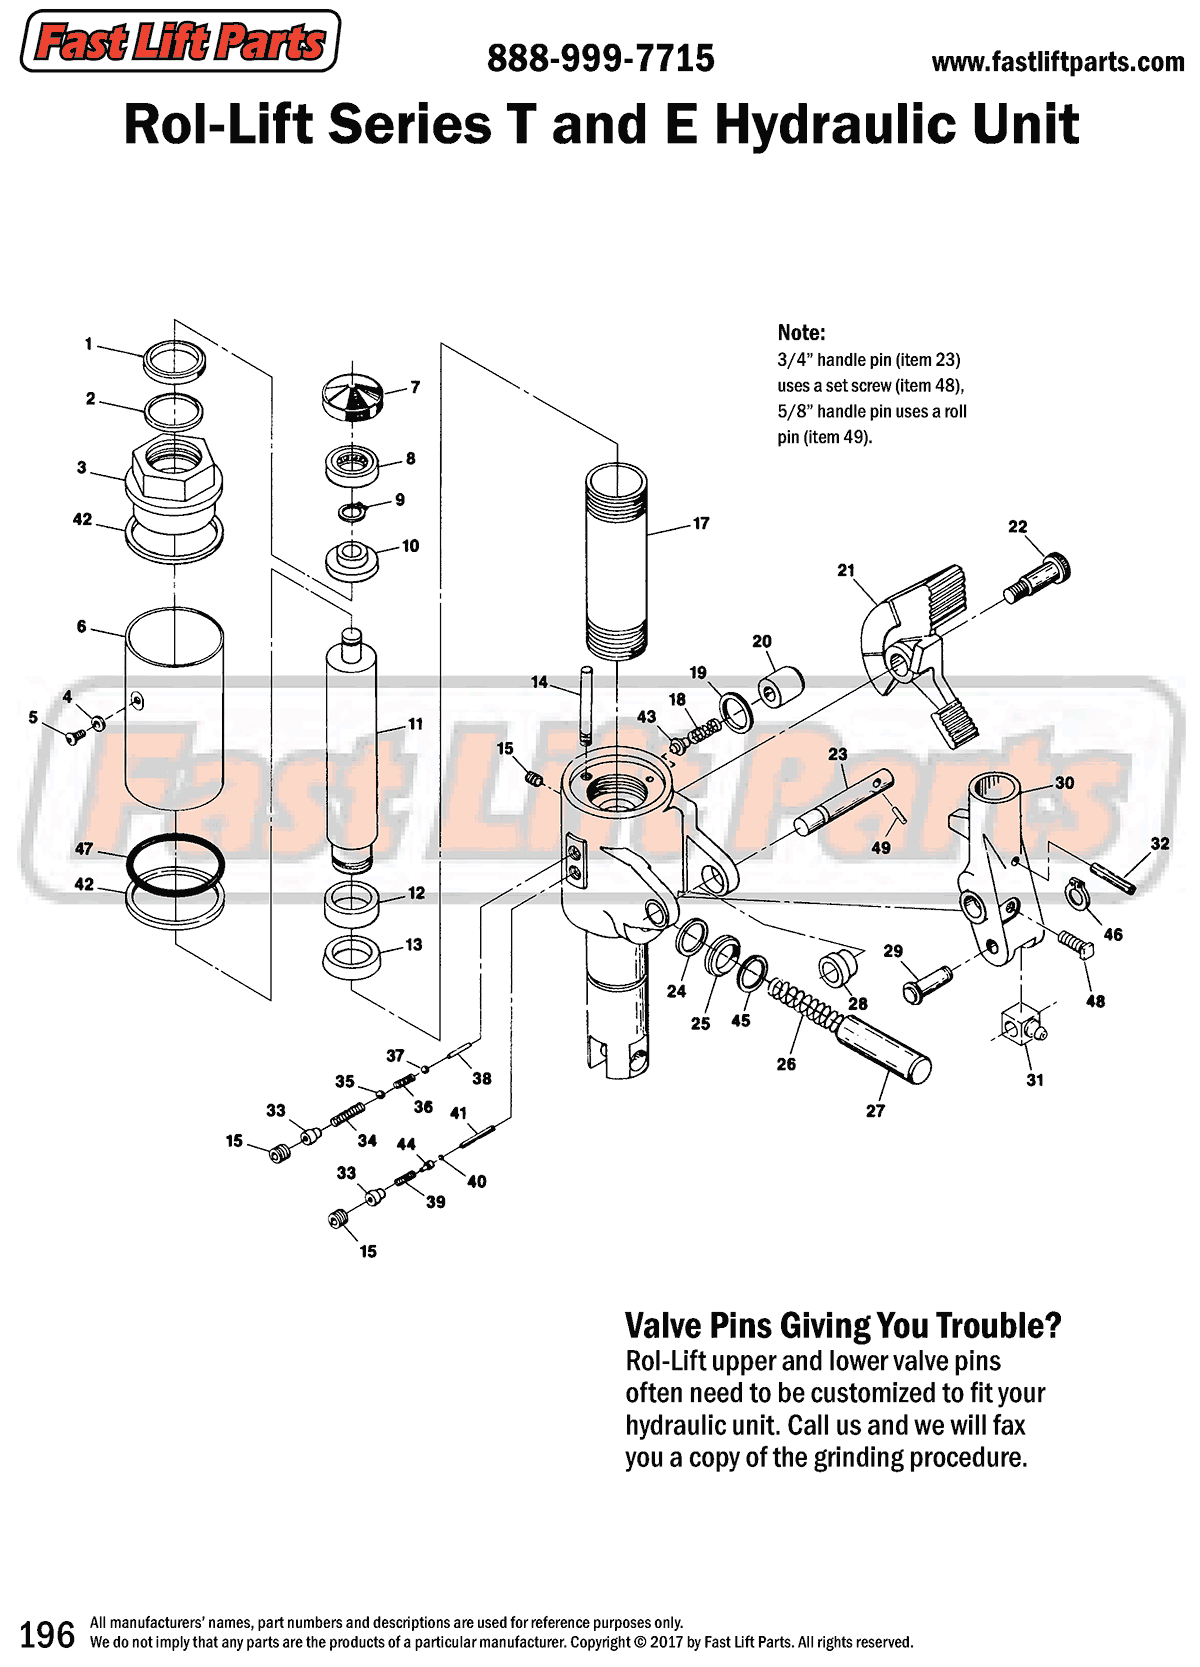 Rol-Lift Series T Hydraulic Unit Line Drawing